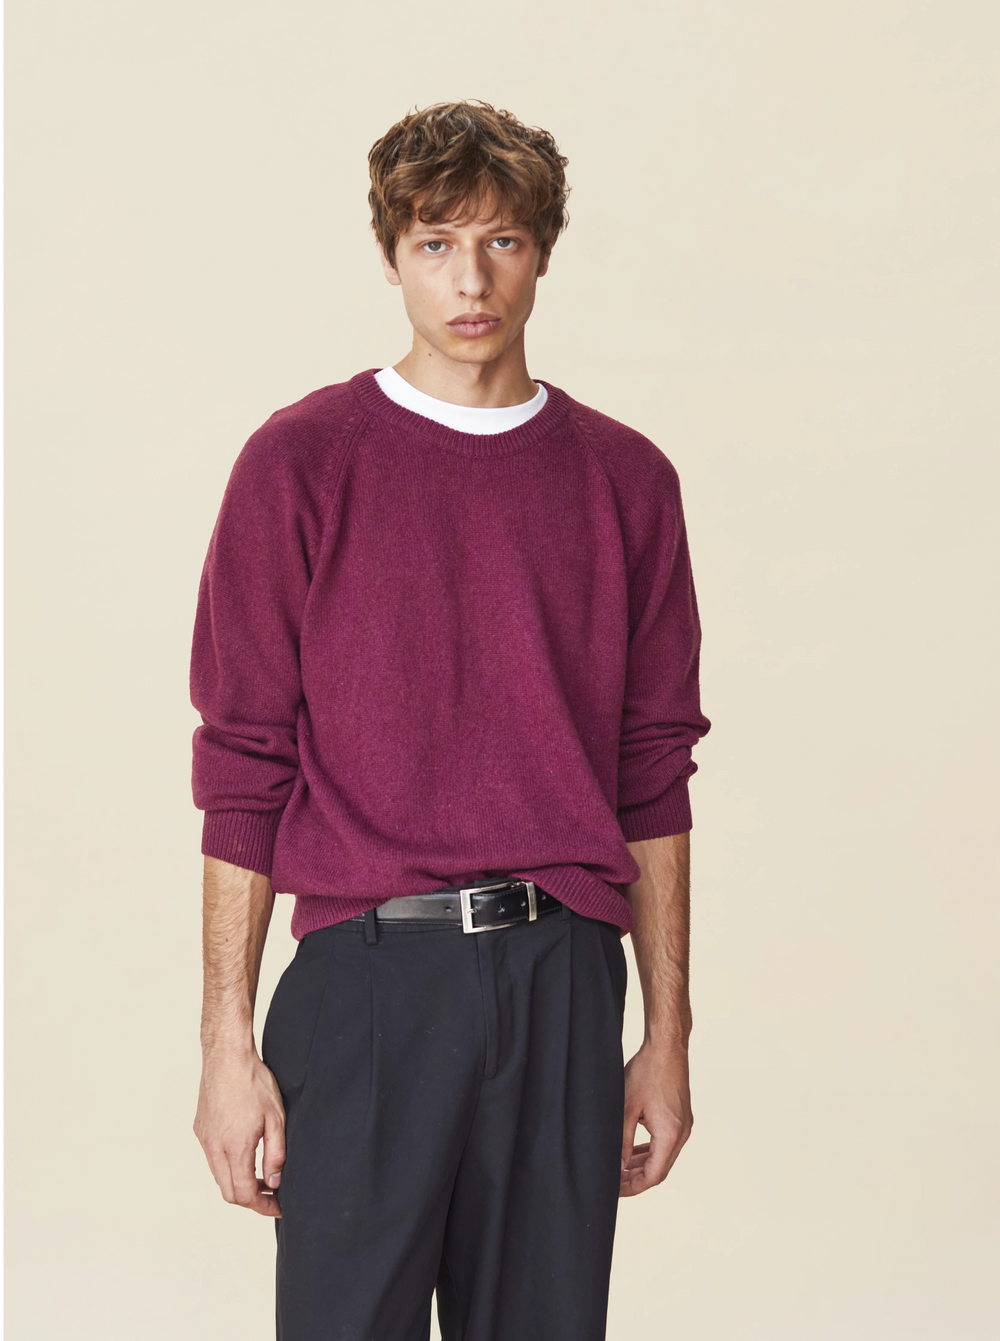 Men's cashmere crewneck sweater in burgundy